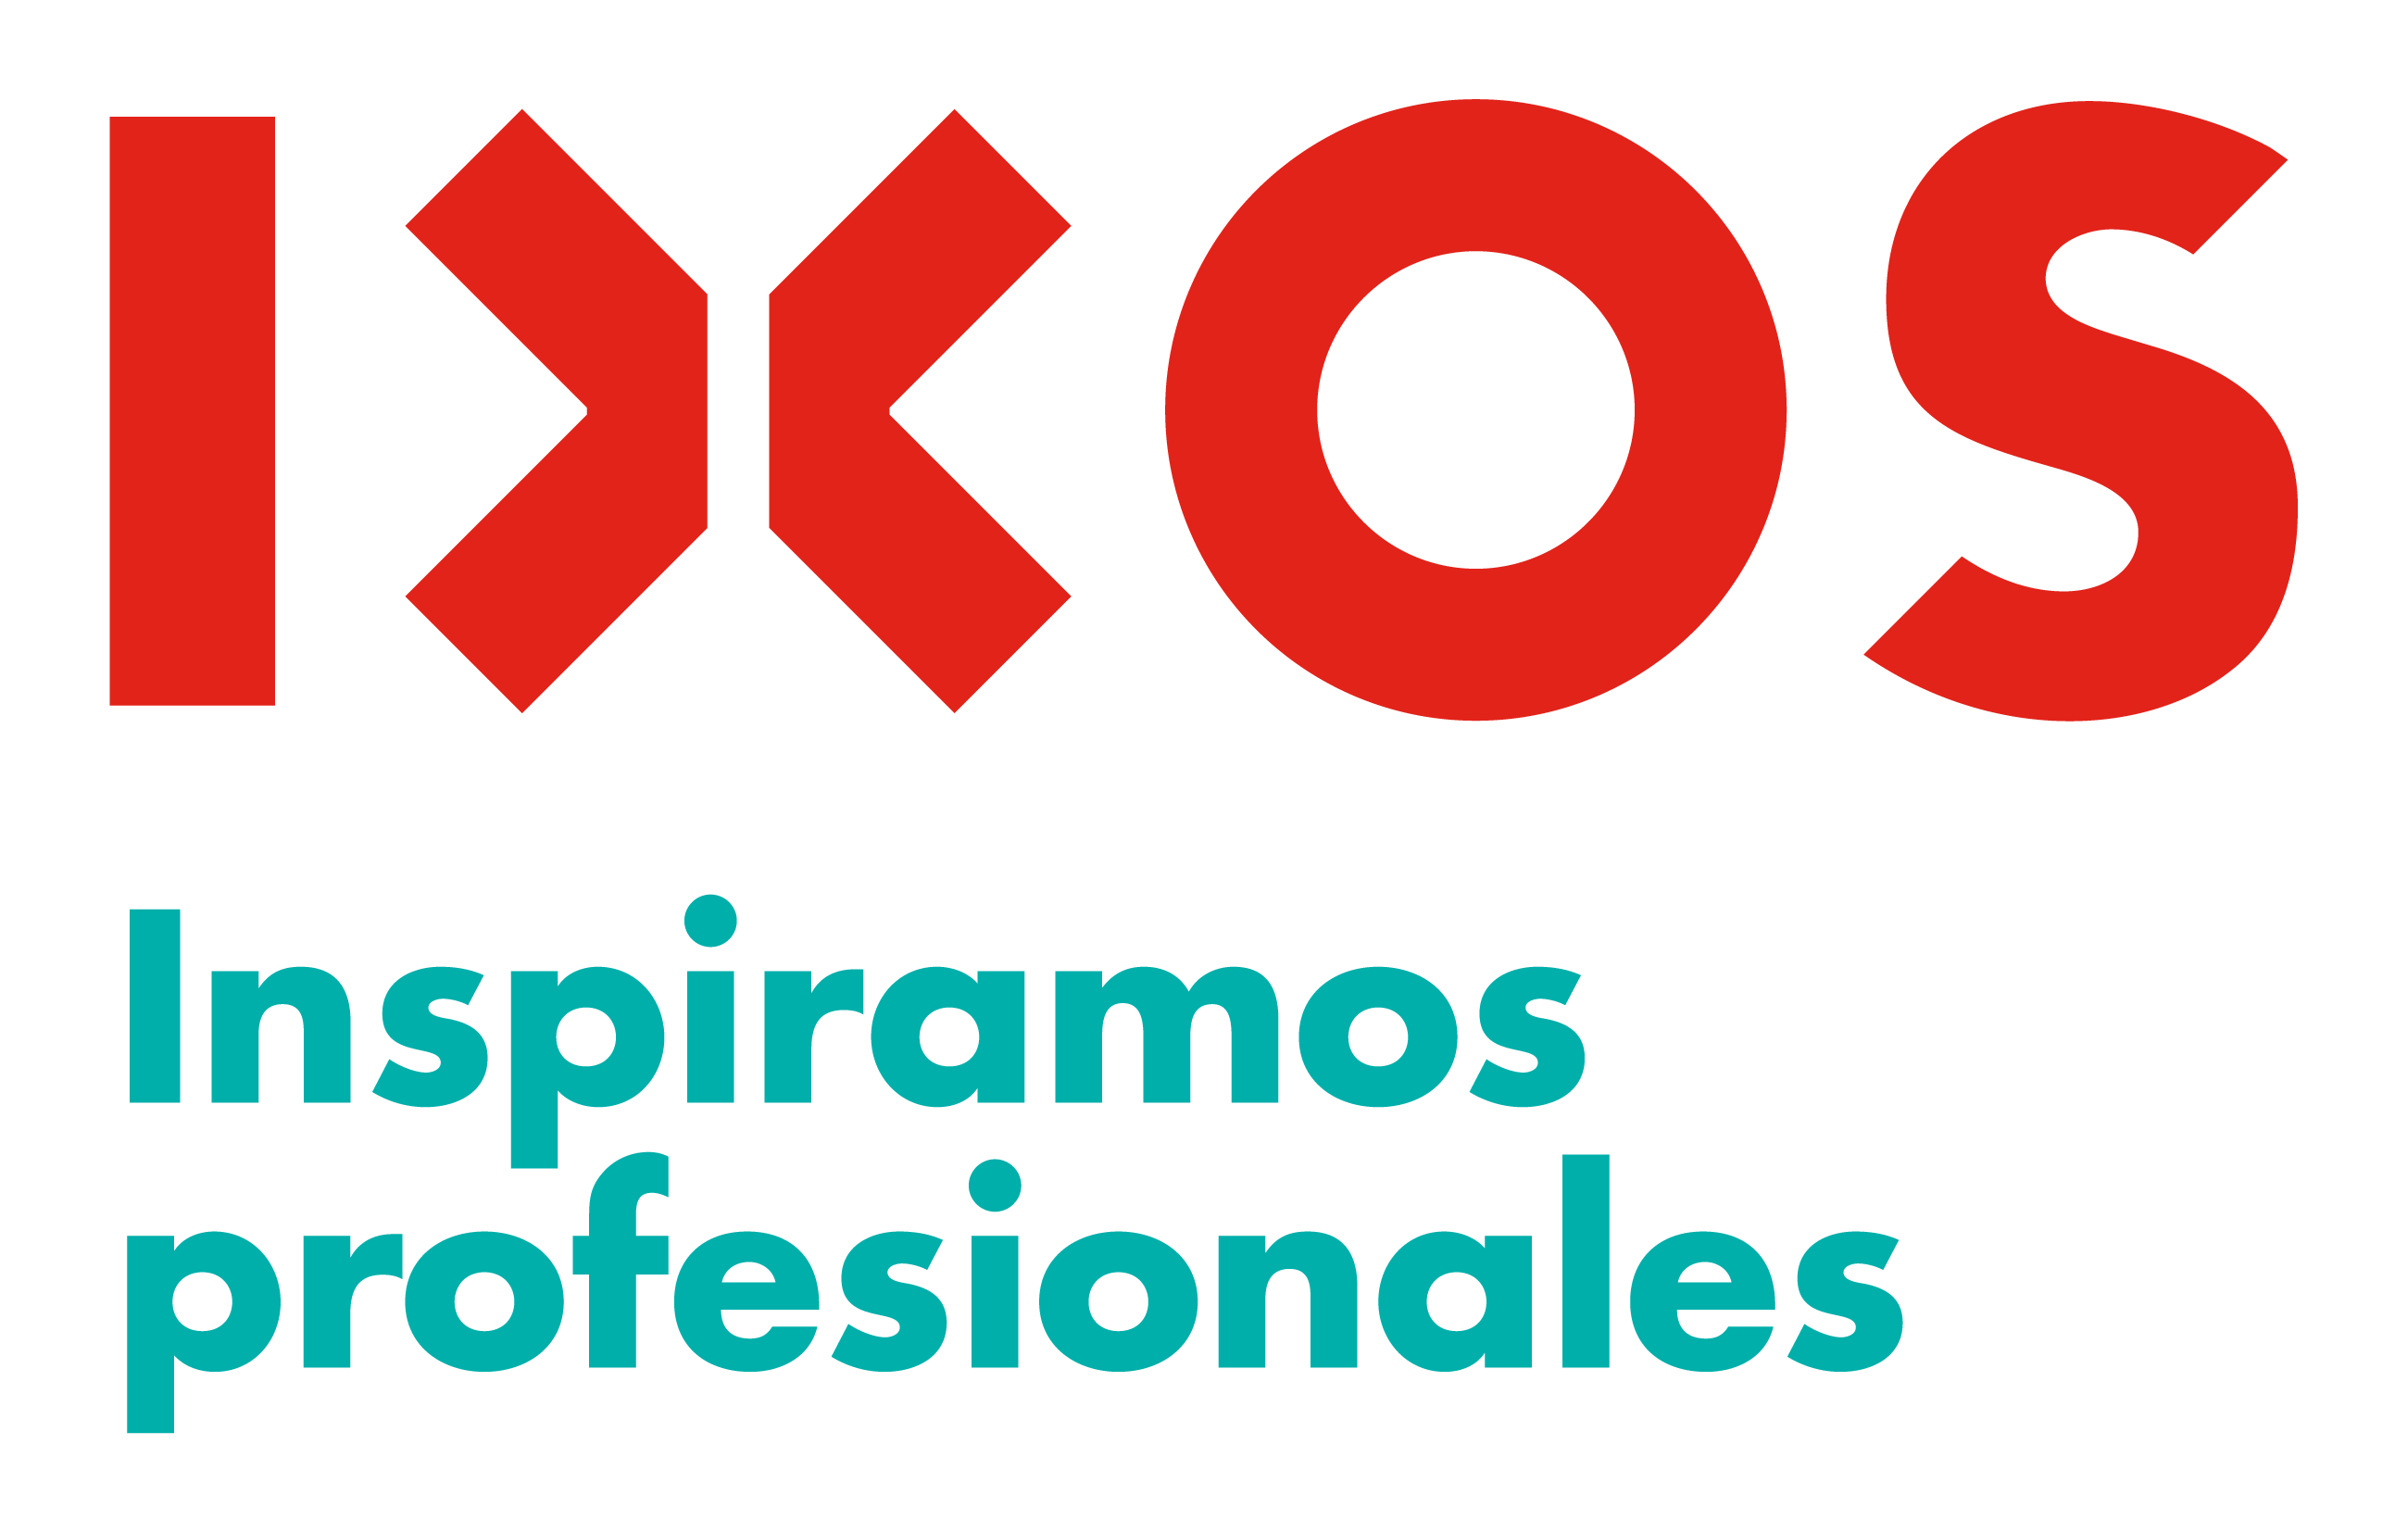 IXOS - Inspiramos profesionales